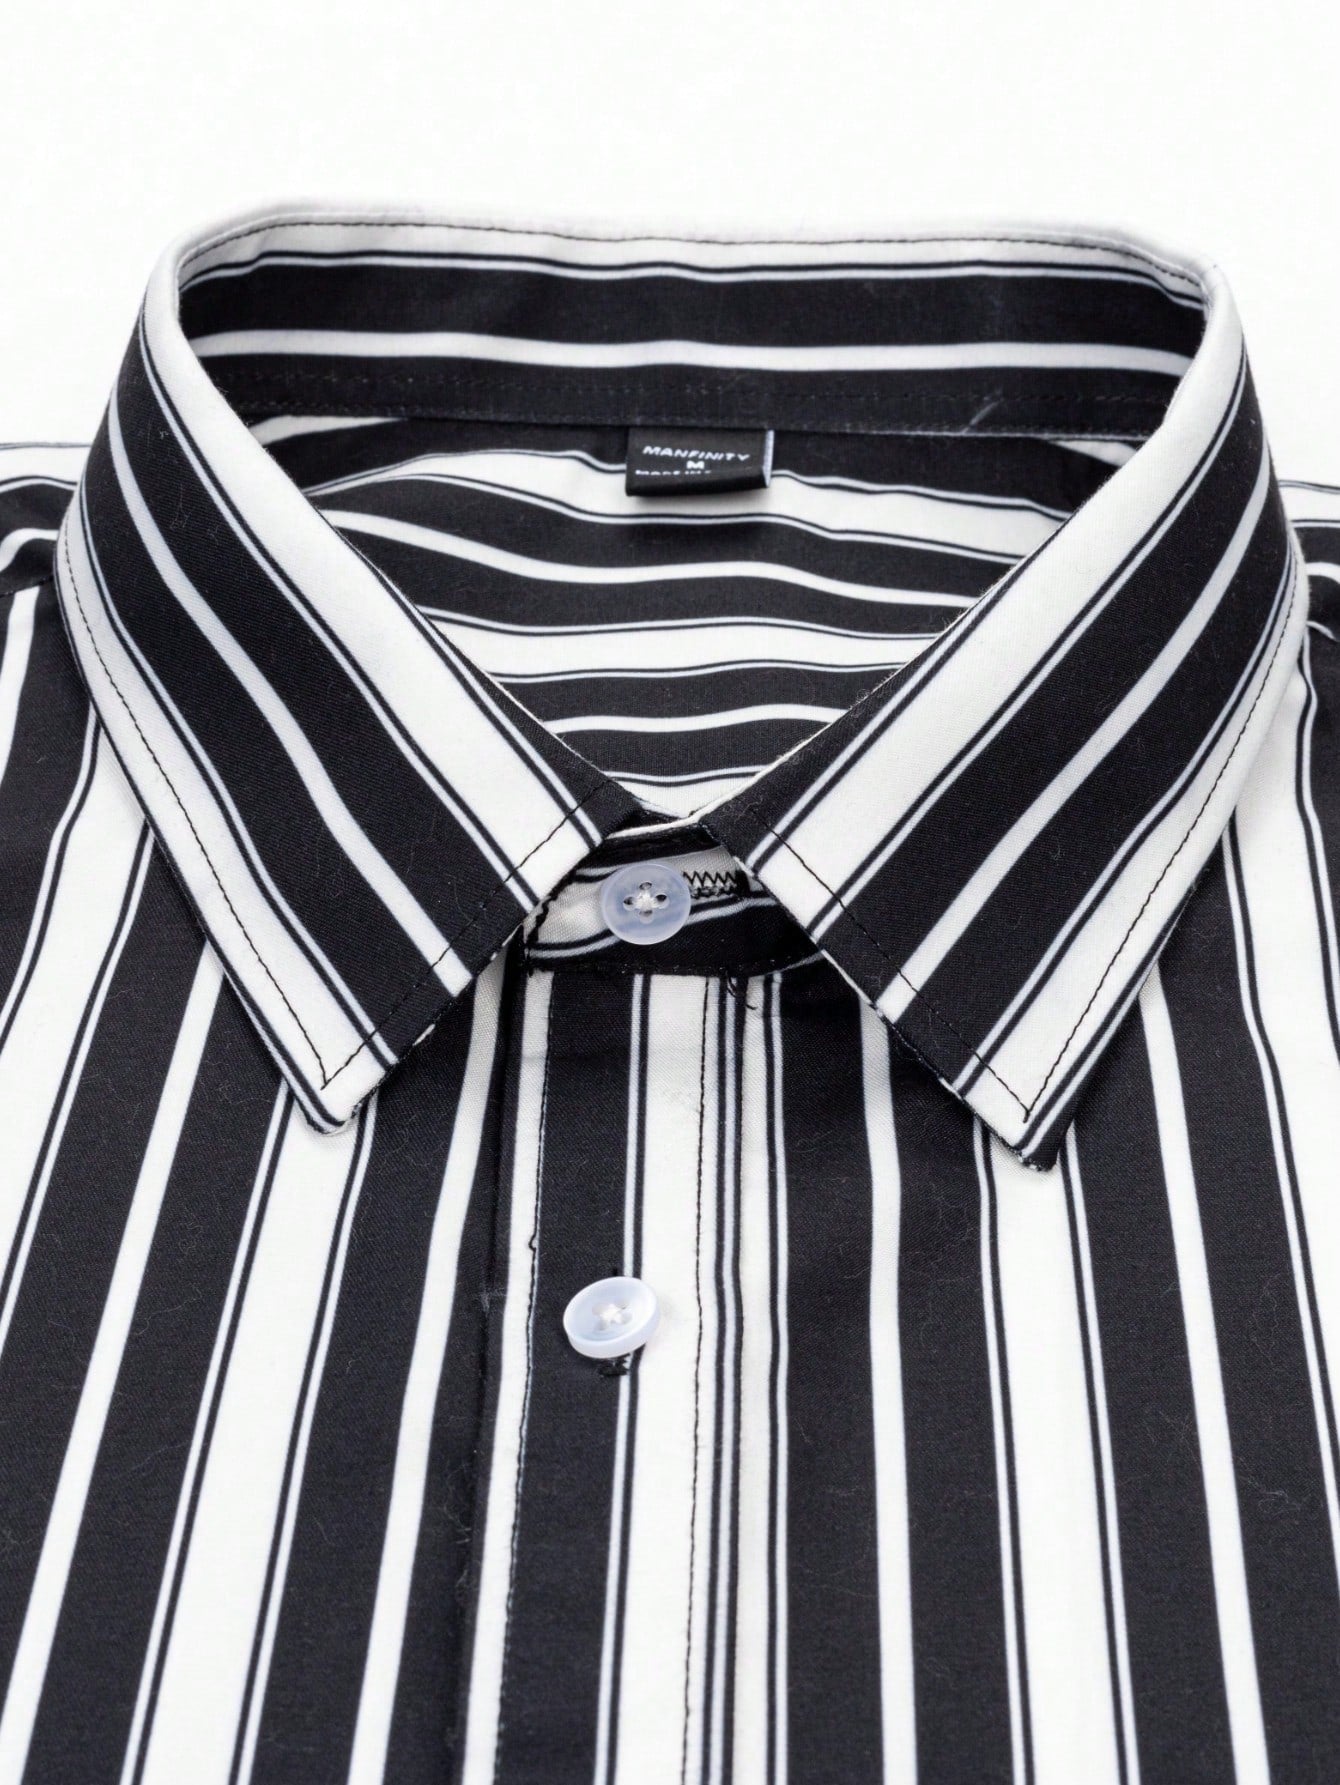 Manfinity Homme Men'S Button-Down Long Sleeve Shirt